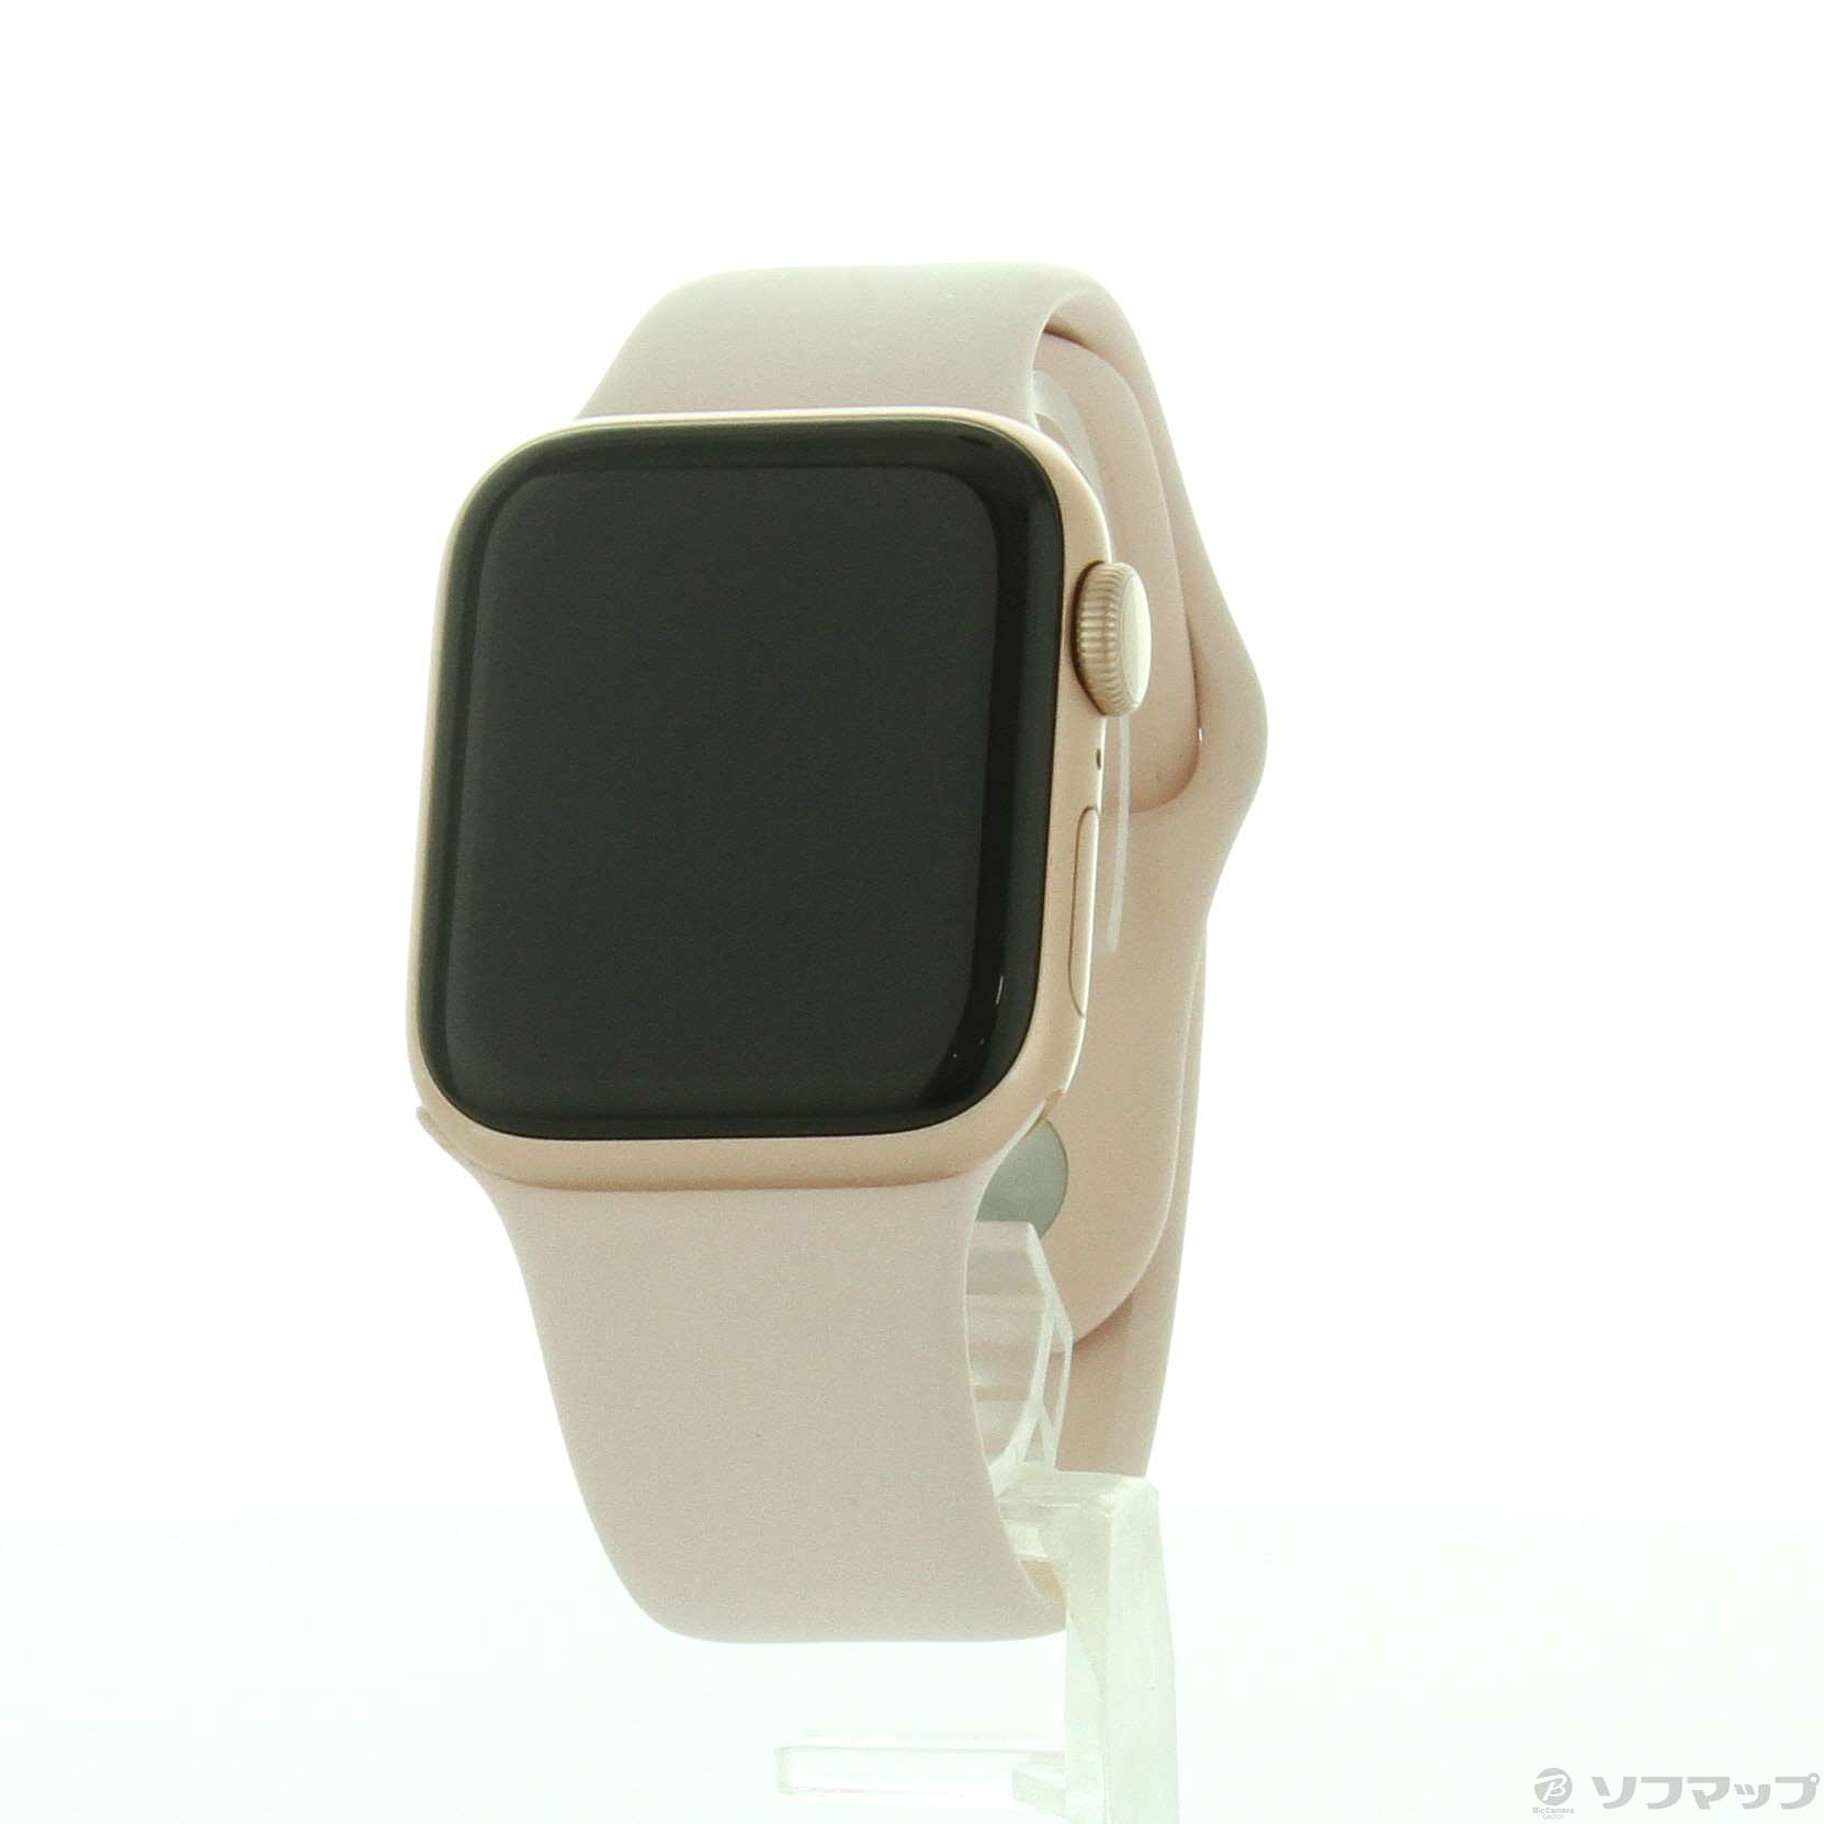 AppleApple Watch Series5 GPSモデル 40mm MWV72J/A - transtac.com.br